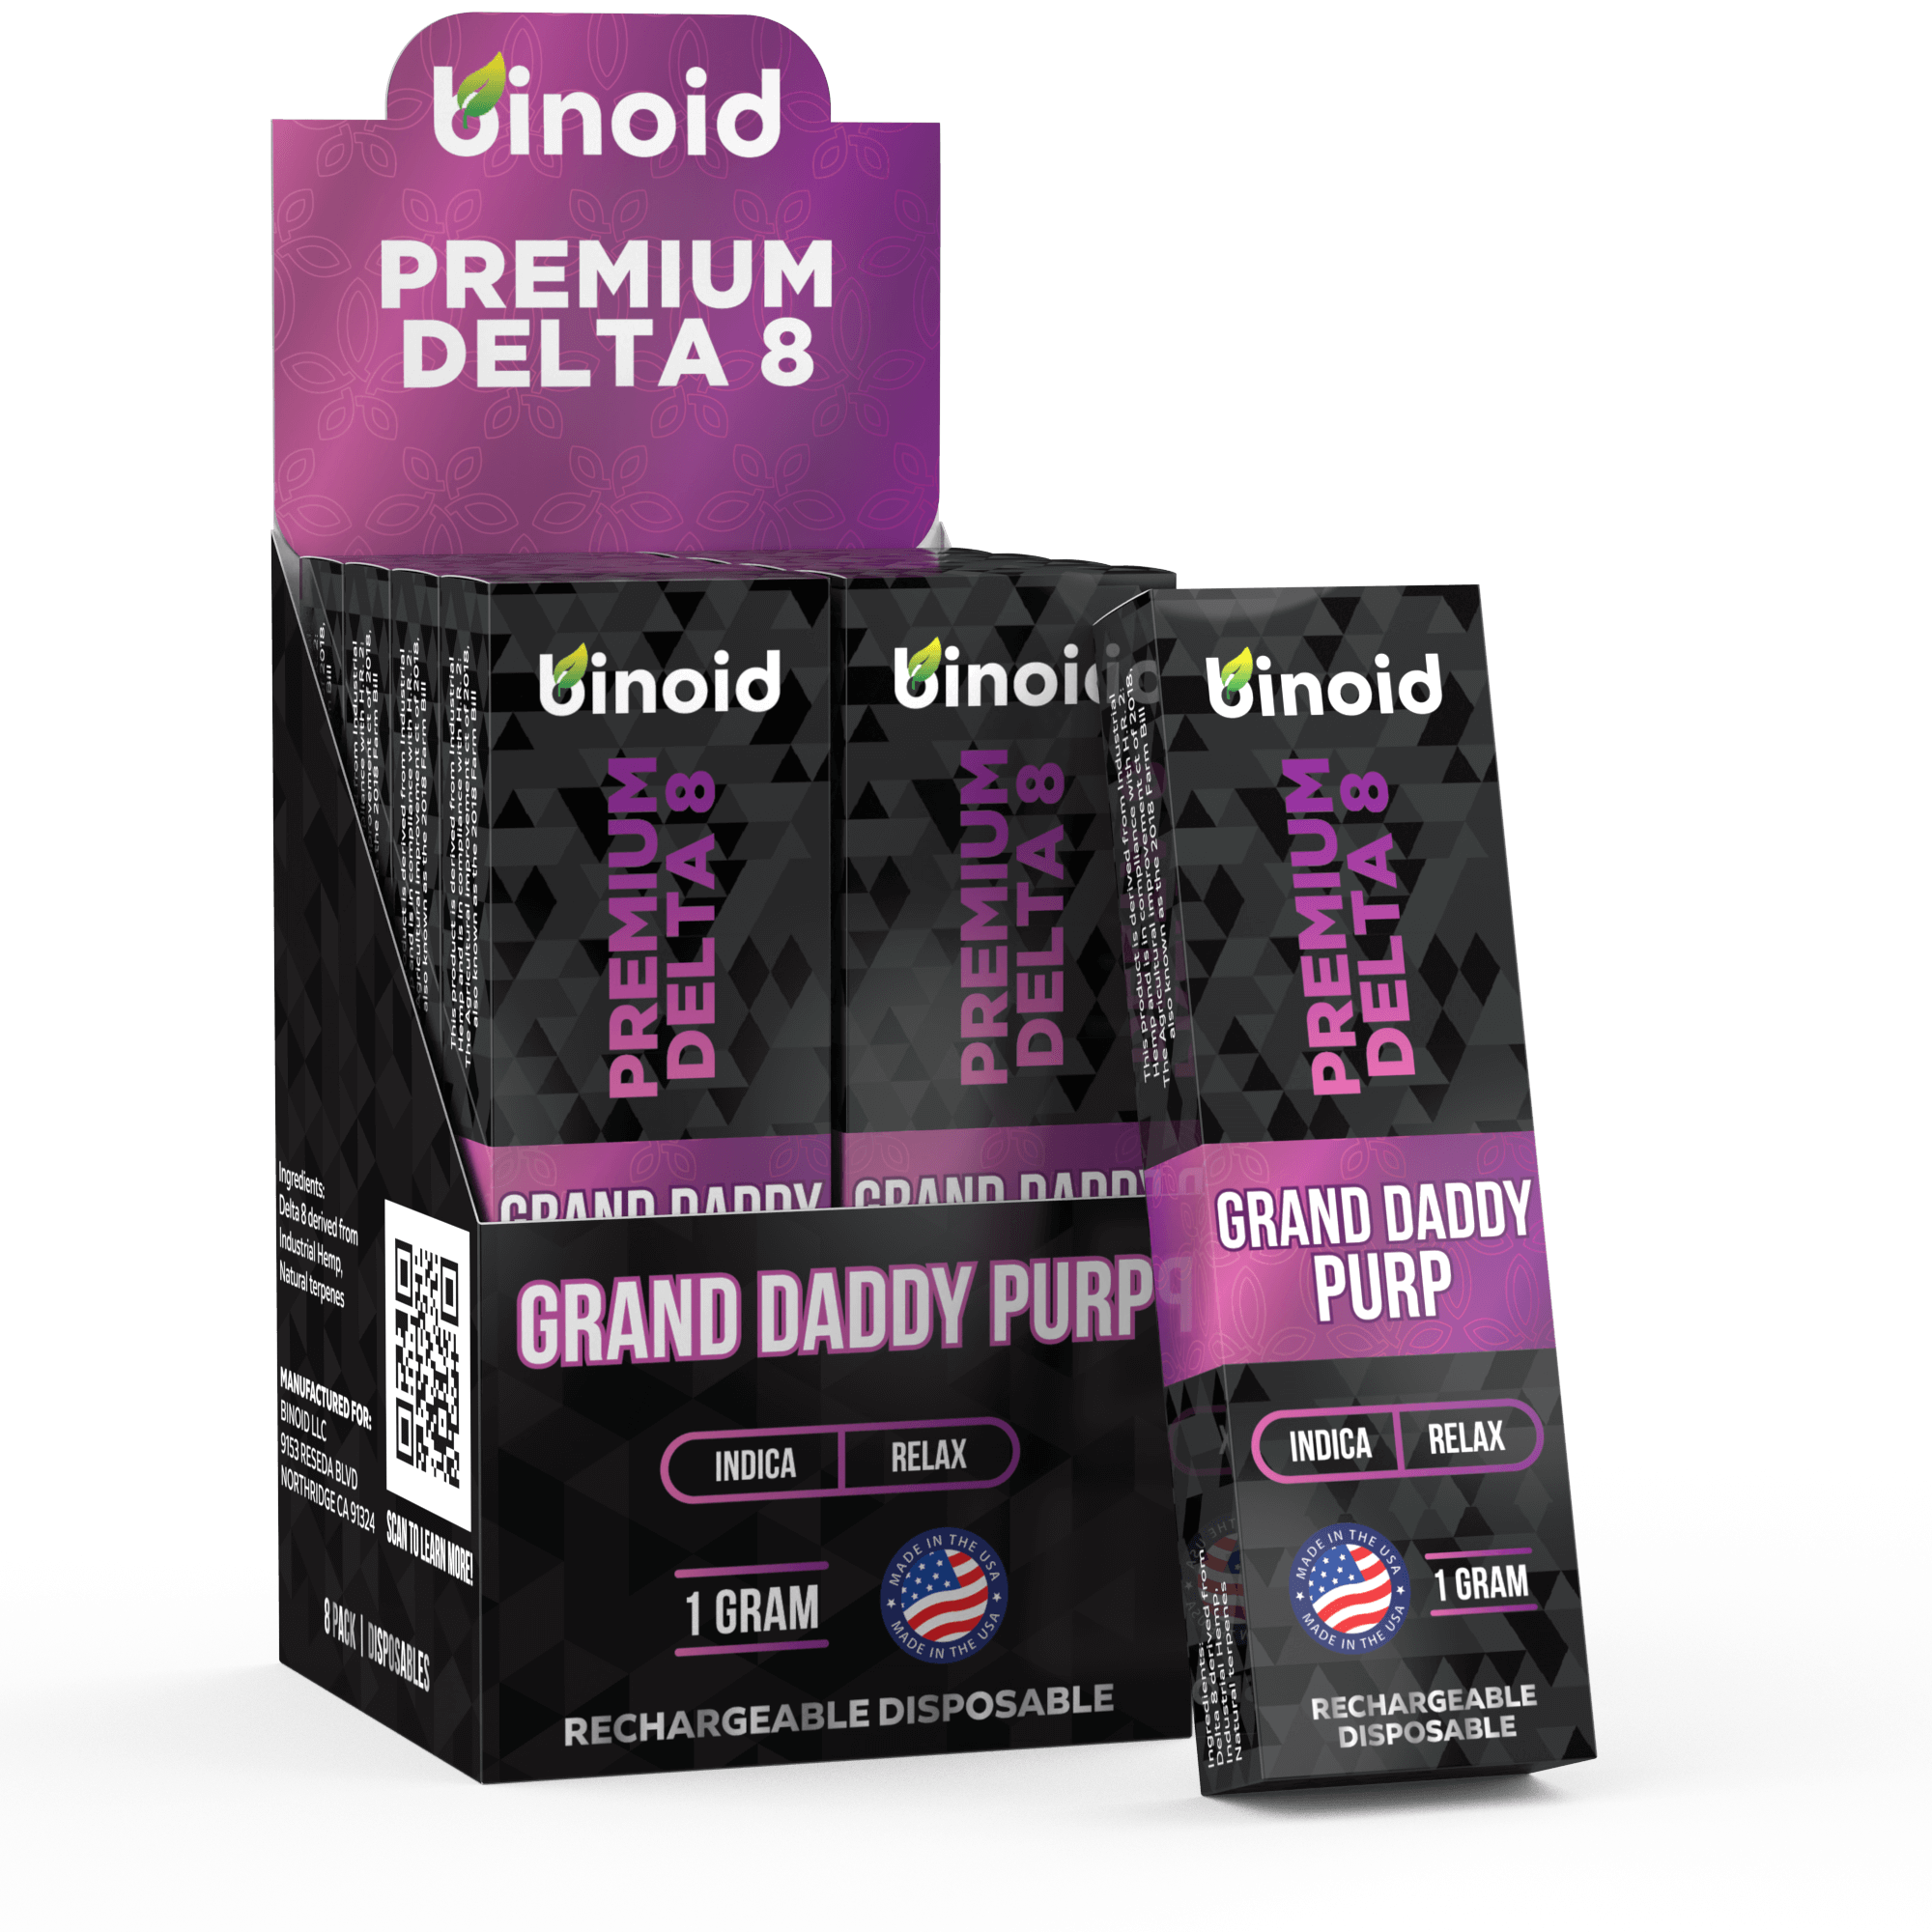 Binoid Delta 8 THC Vape Cartridge - Grand Daddy Purp Best Price